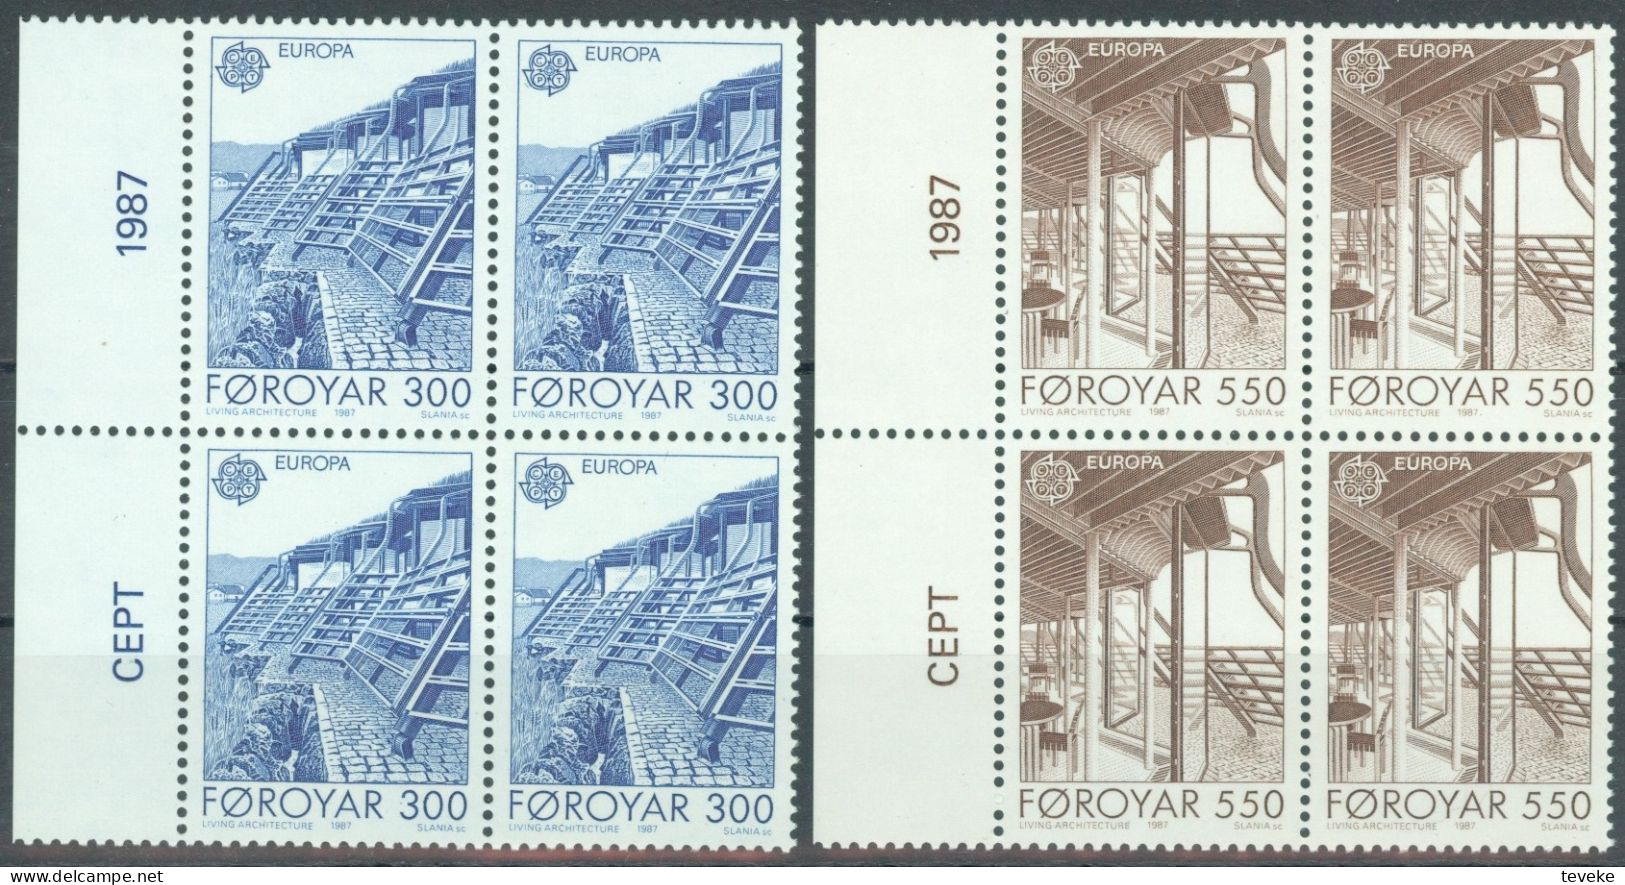 FAEROËR 1987 - MiNr. 149/150 BL4 - **/MNH - Europa/CEPT - Modern Architecture - Faroe Islands